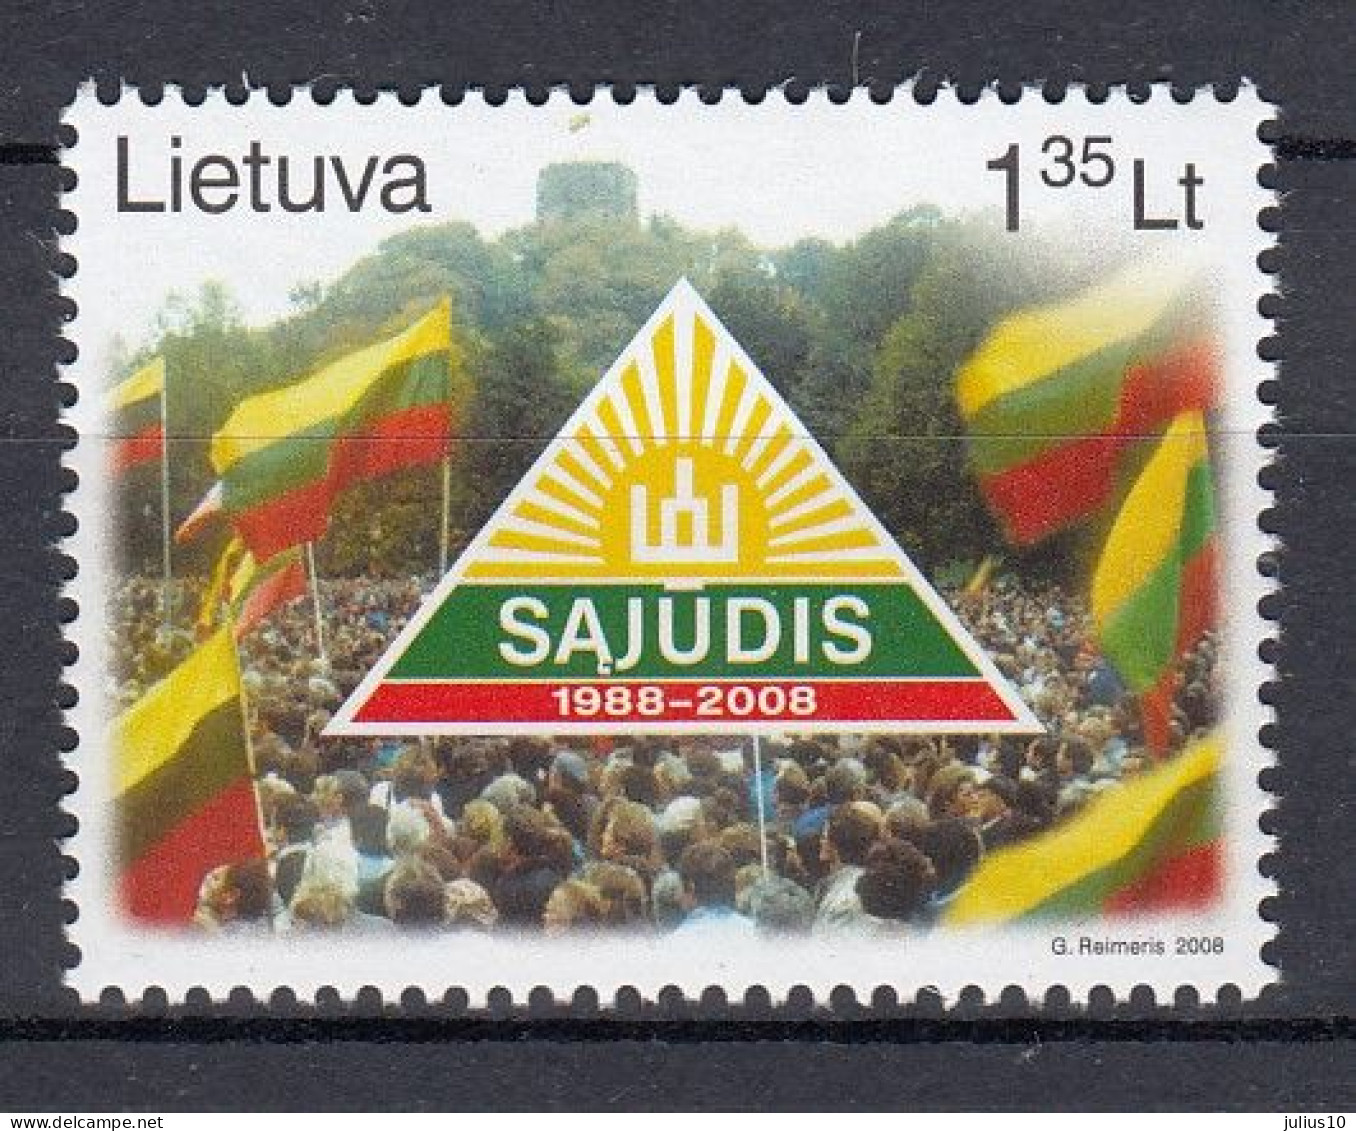 LITHUANIA 2008 Sajudis Anniversary MNH(**) Mi 972 #Lt940 - Lituania